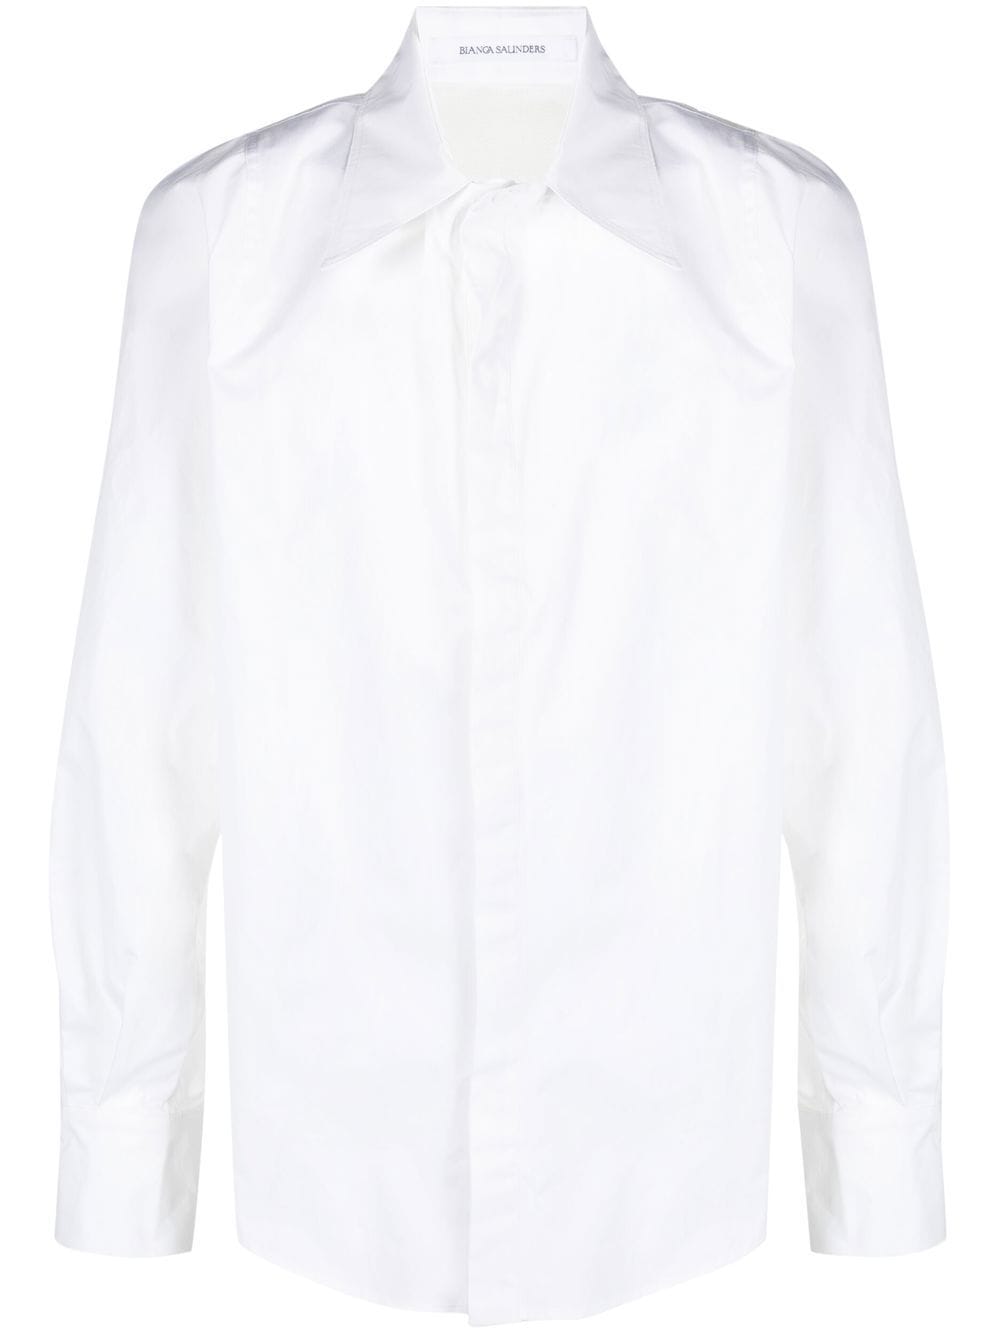 Tory Burch straight-point Collar button-down Shirt - Farfetch